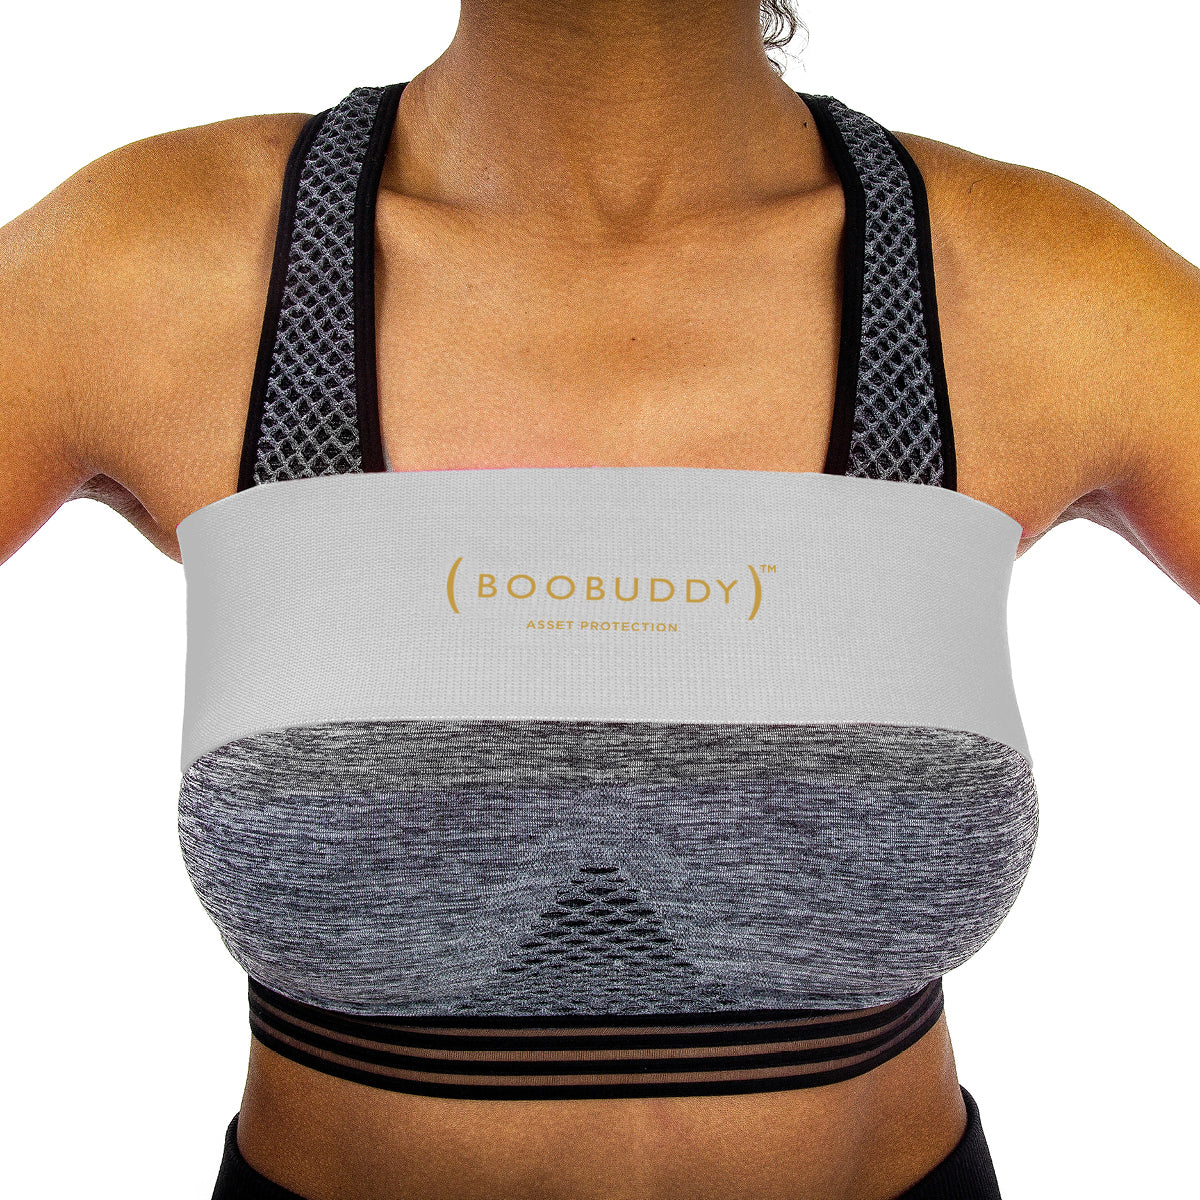 Boobuddy Adjustable Breast Support Band | Grey | How to Wear a Boobuddy